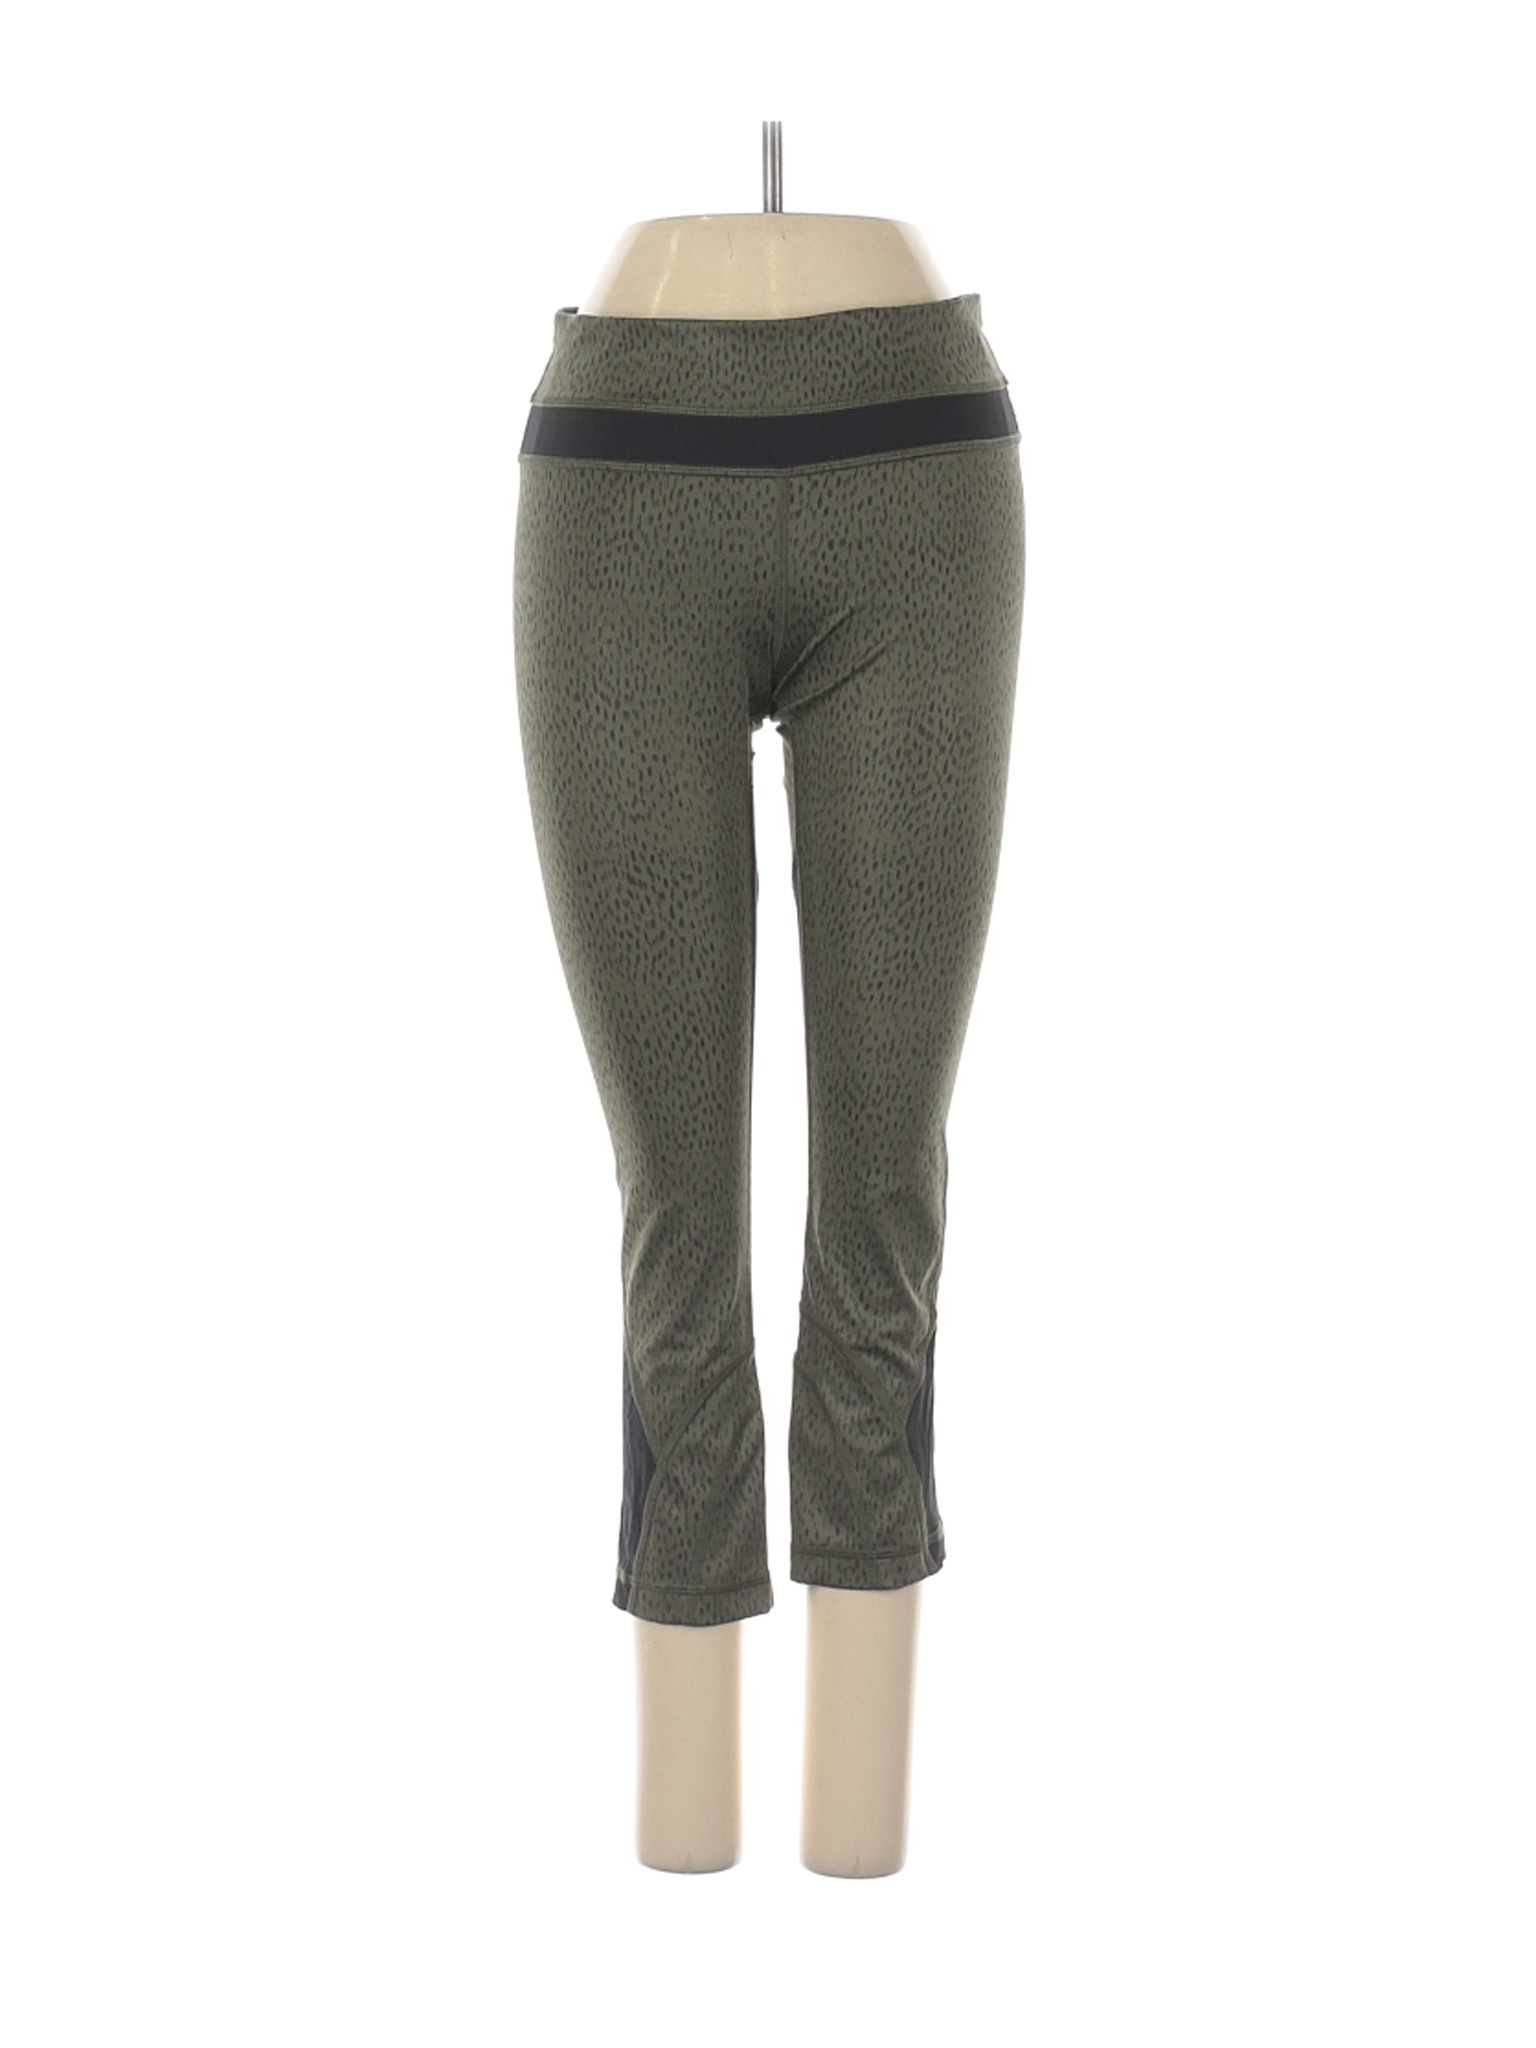 Lululemon Athletica Women Green Active Pants 4 | eBay